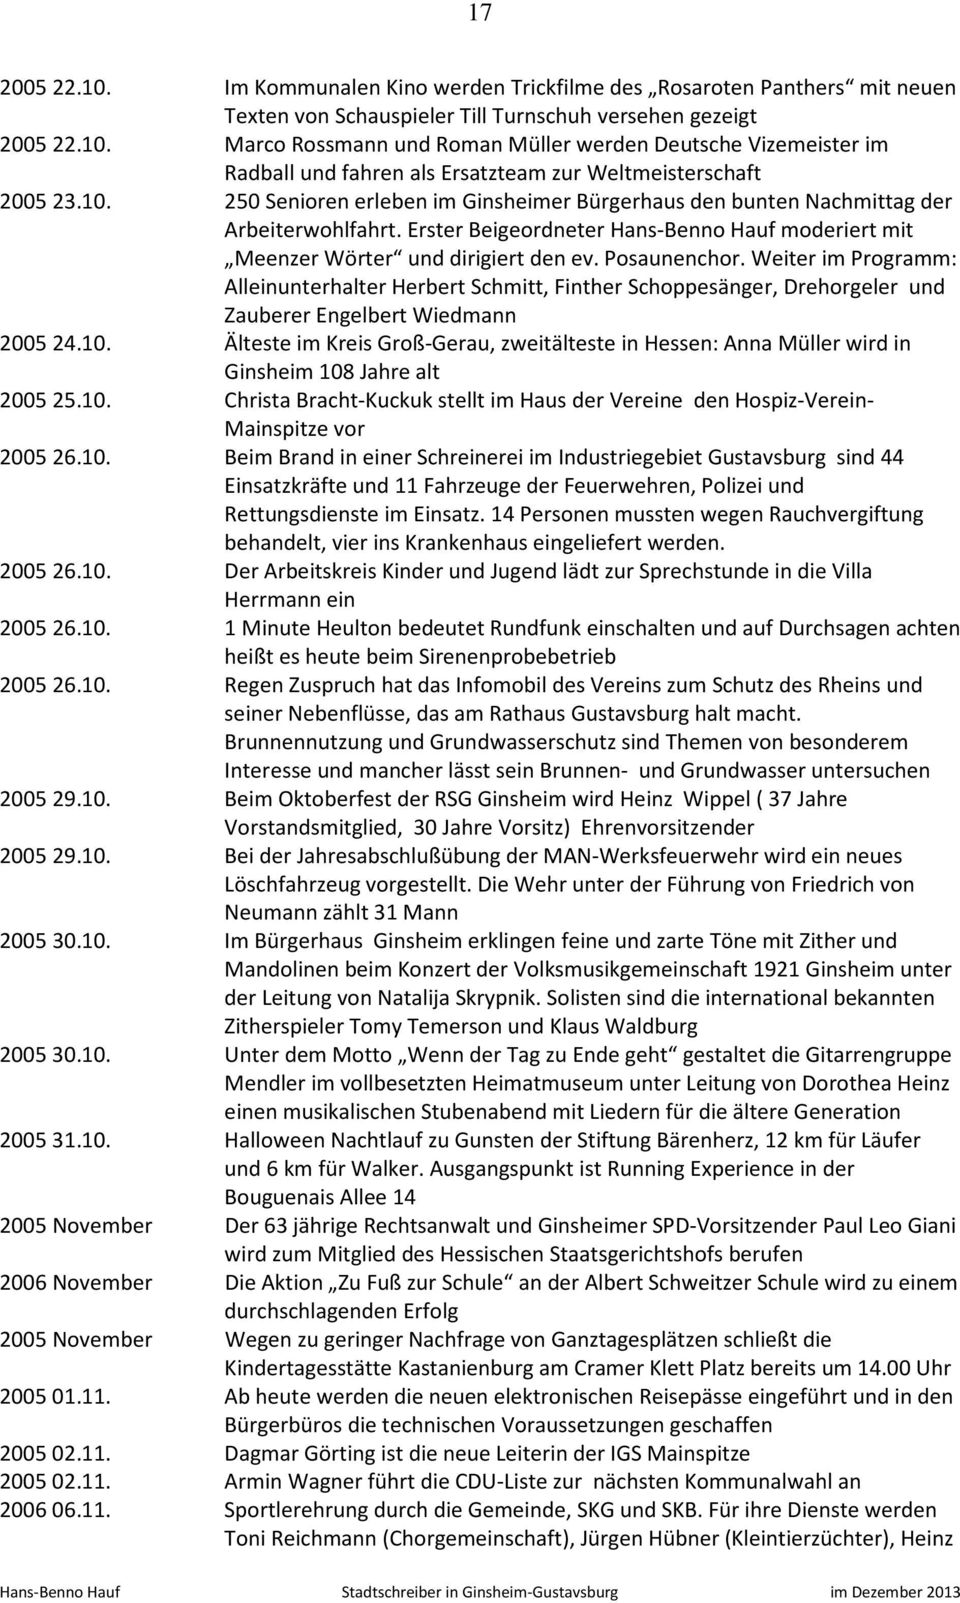 Weiter im Programm: Alleinunterhalter Herbert Schmitt, Finther Schoppesänger, Drehorgeler und Zauberer Engelbert Wiedmann 2005 24.10.